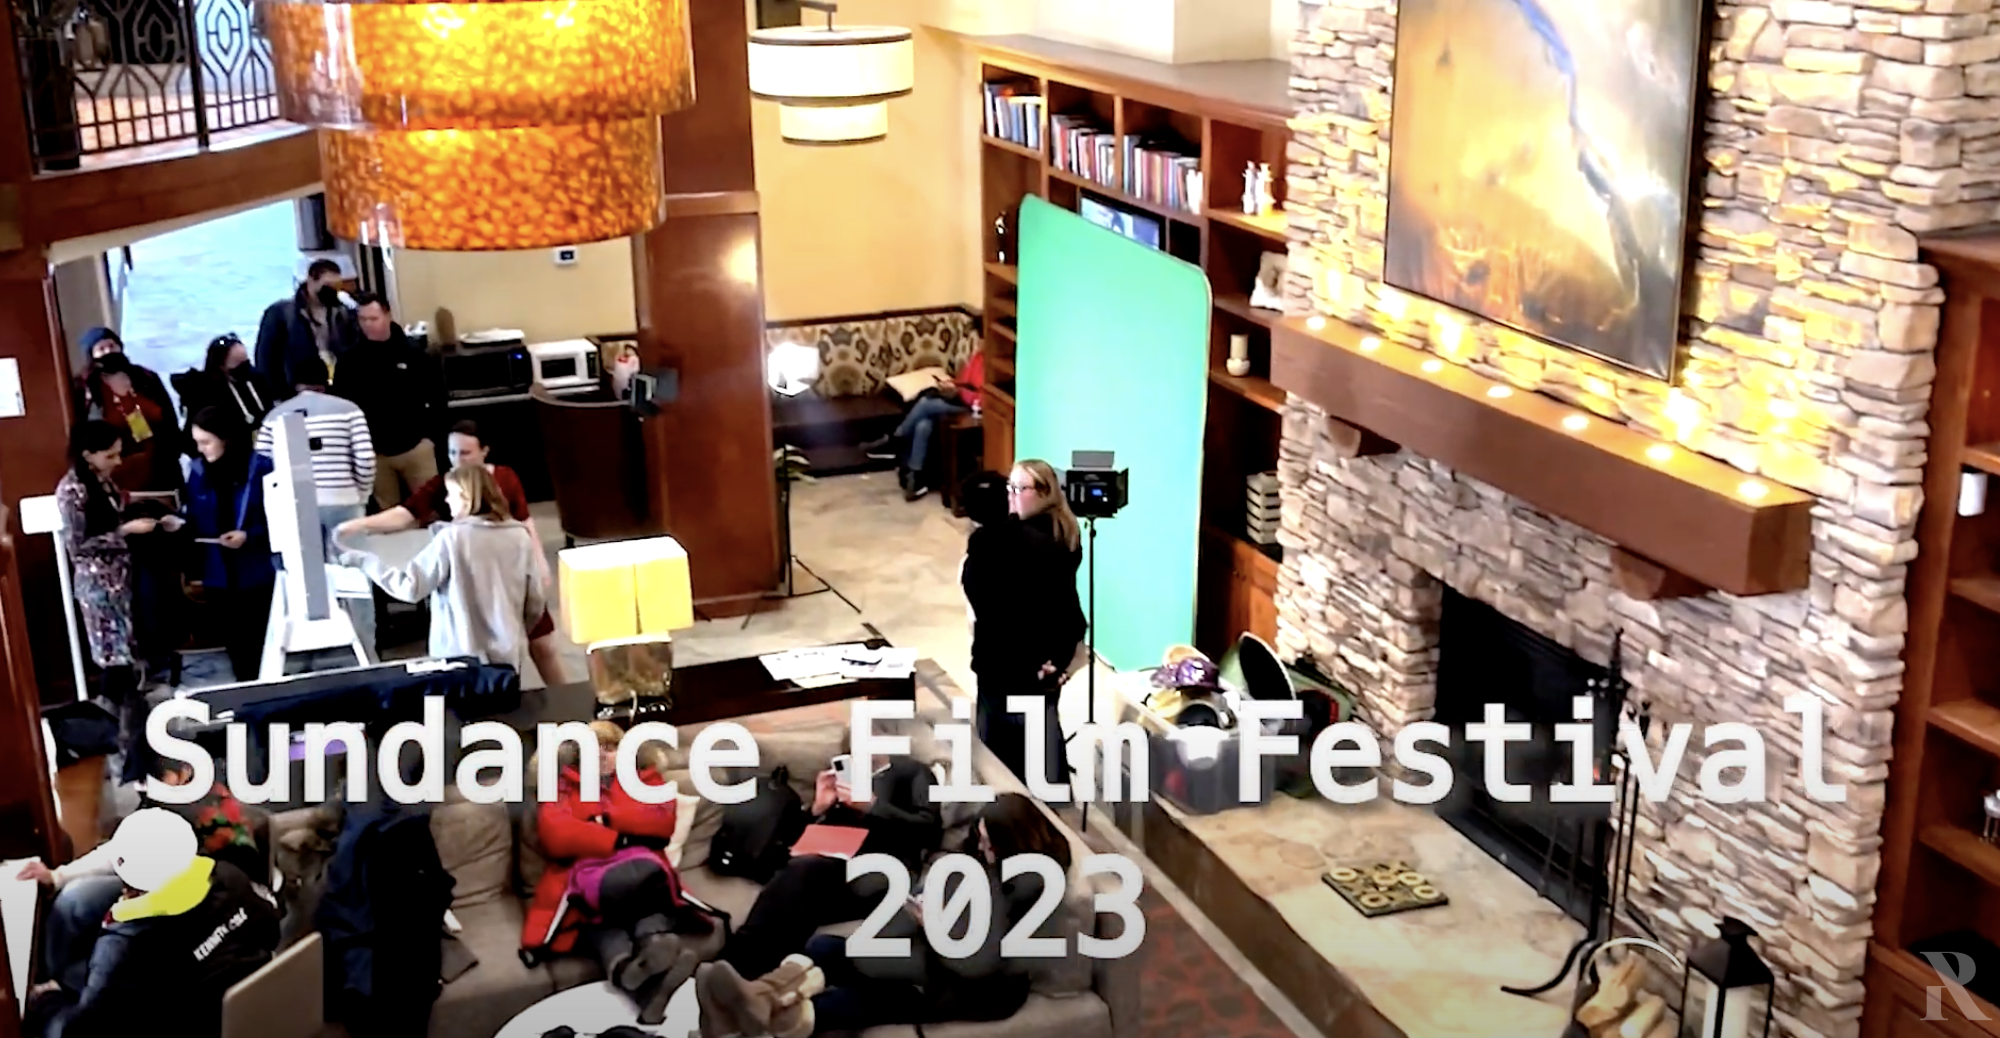 Sundance Film Festival Headquarters in Park City. 2023.